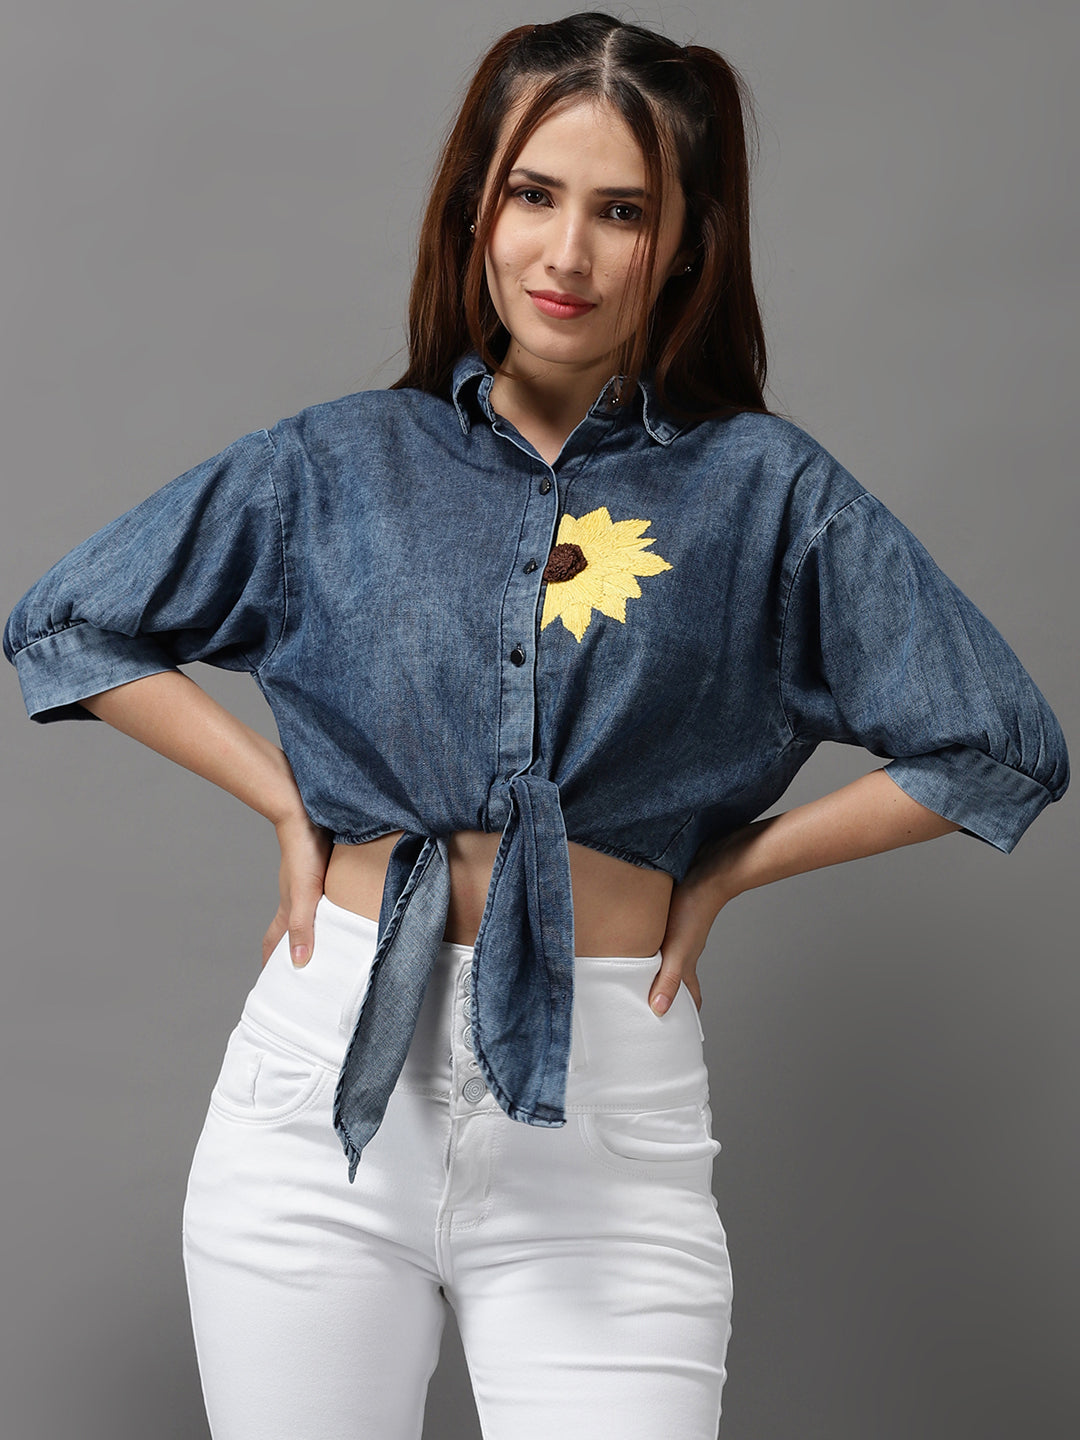 Women Shirt Collar Embroidered Blue Shirt Style Top